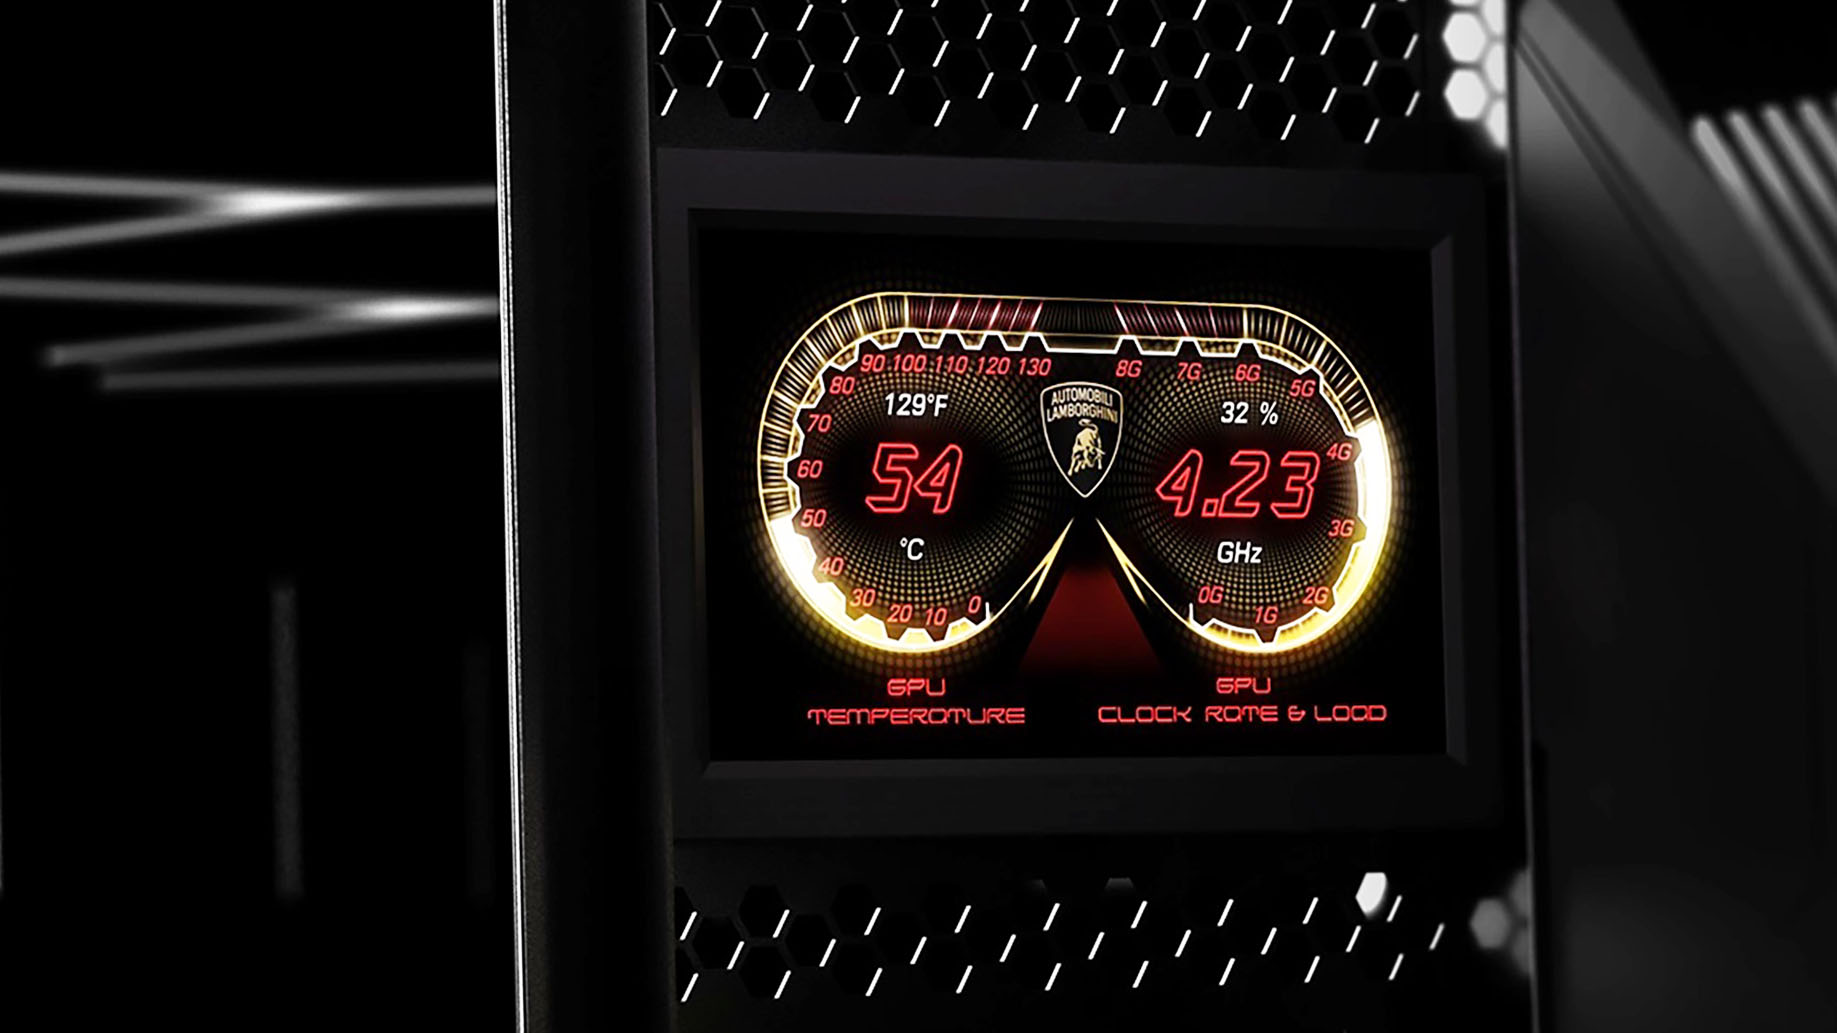 Lian Li Lamborghini 011D PC case dashboard screen